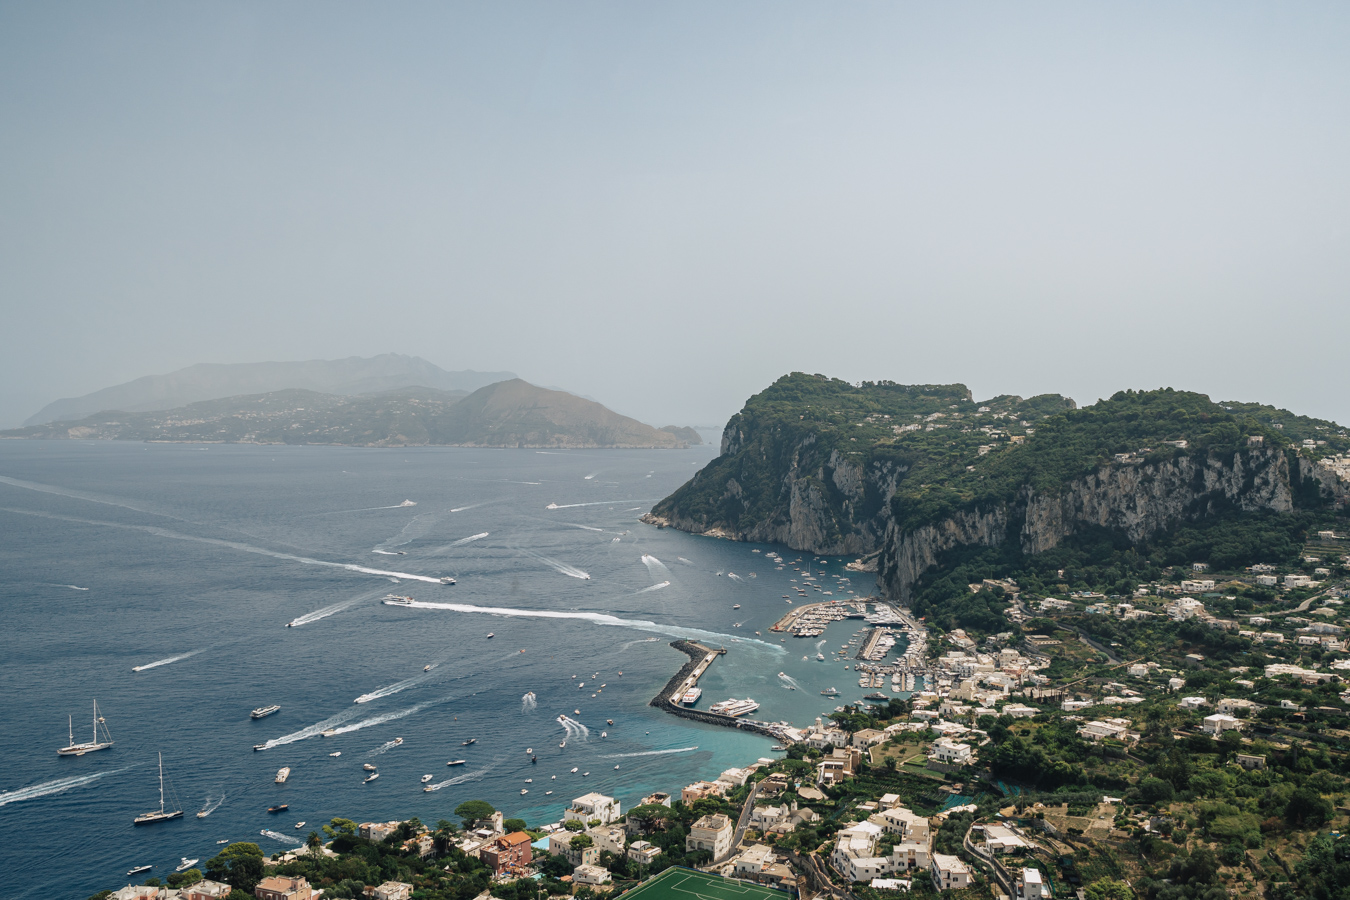 Photograph of Capri, Italy